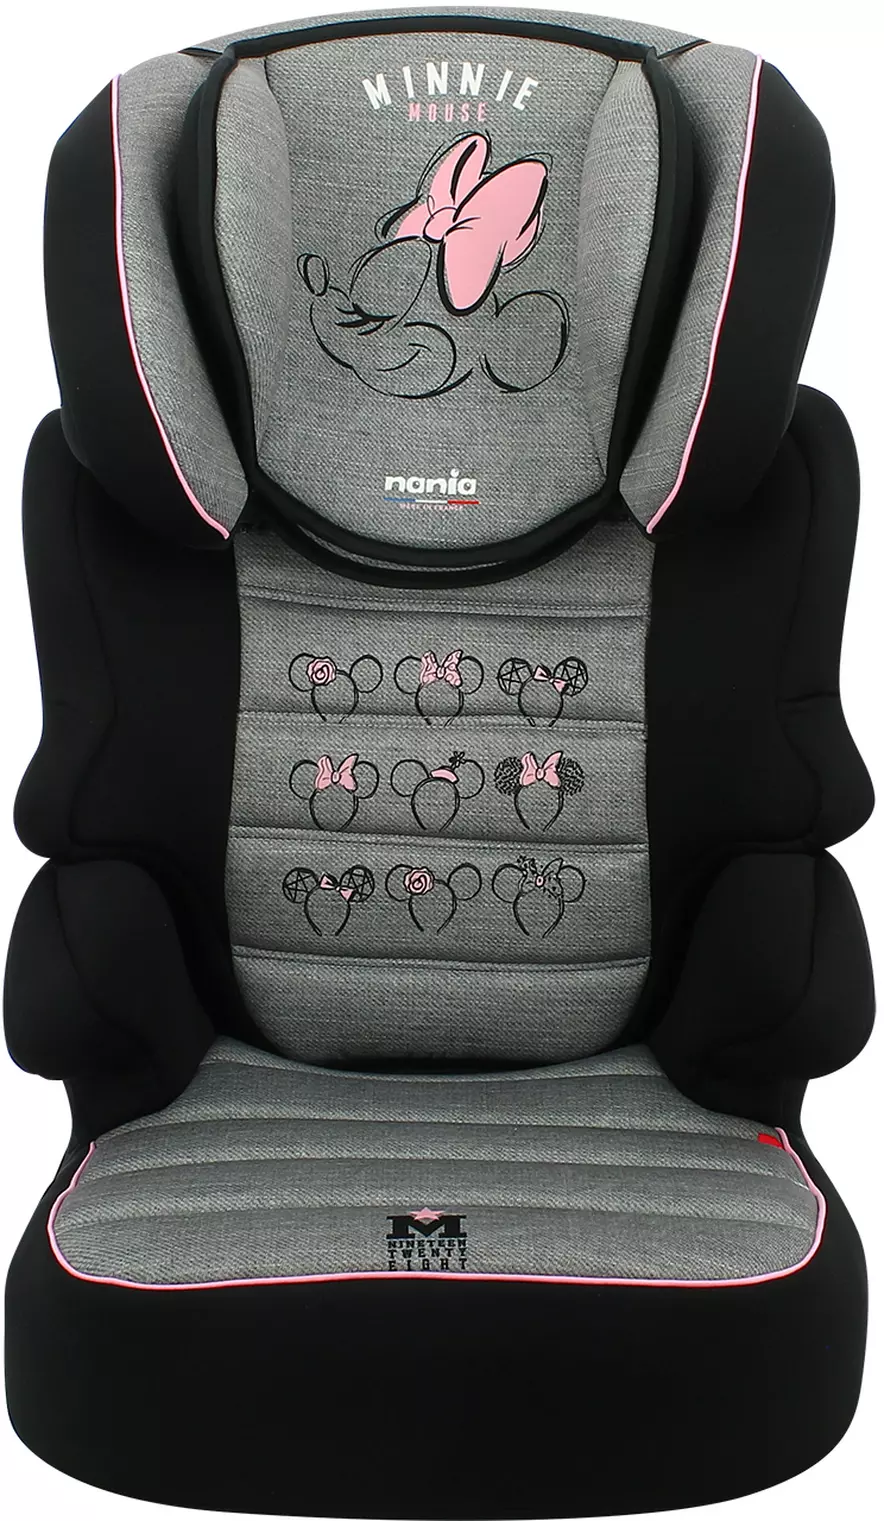 Nania Befix Group 2/3 Booster Car Seat - Black (4-12 Years)